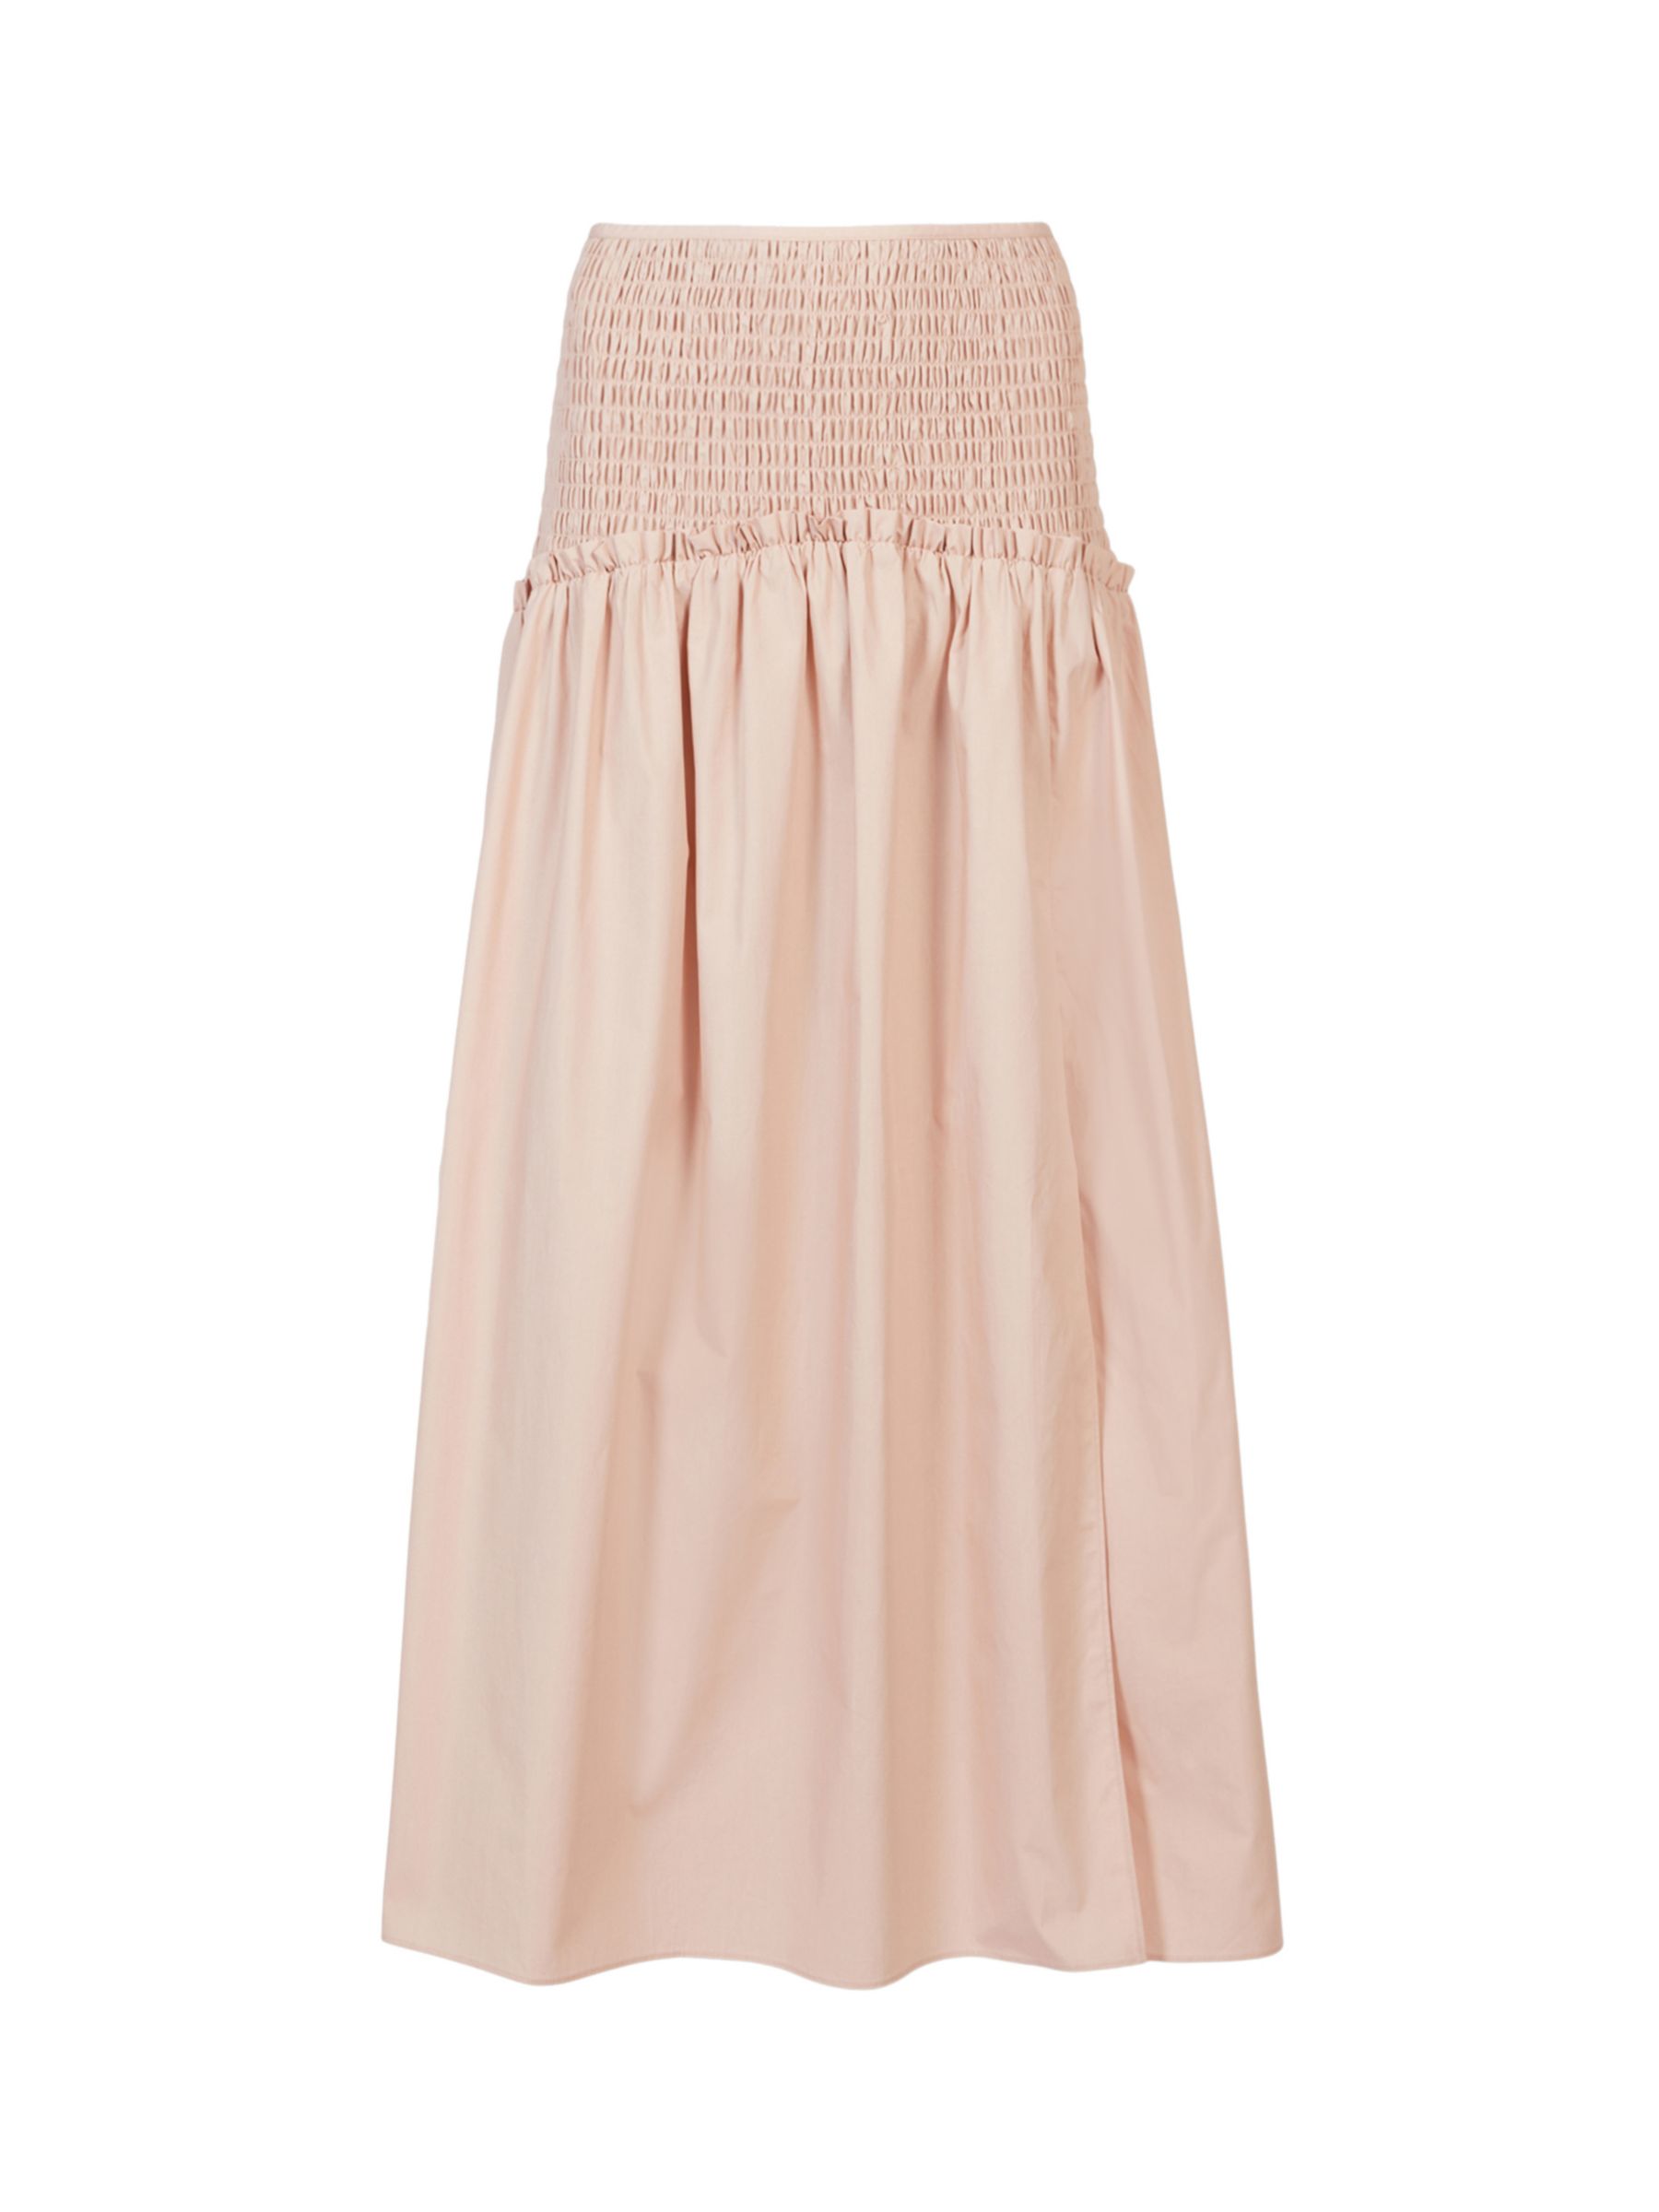 AllSaints Alex Shirred Organic Cotton Skirt, Soft Pink at John Lewis ...